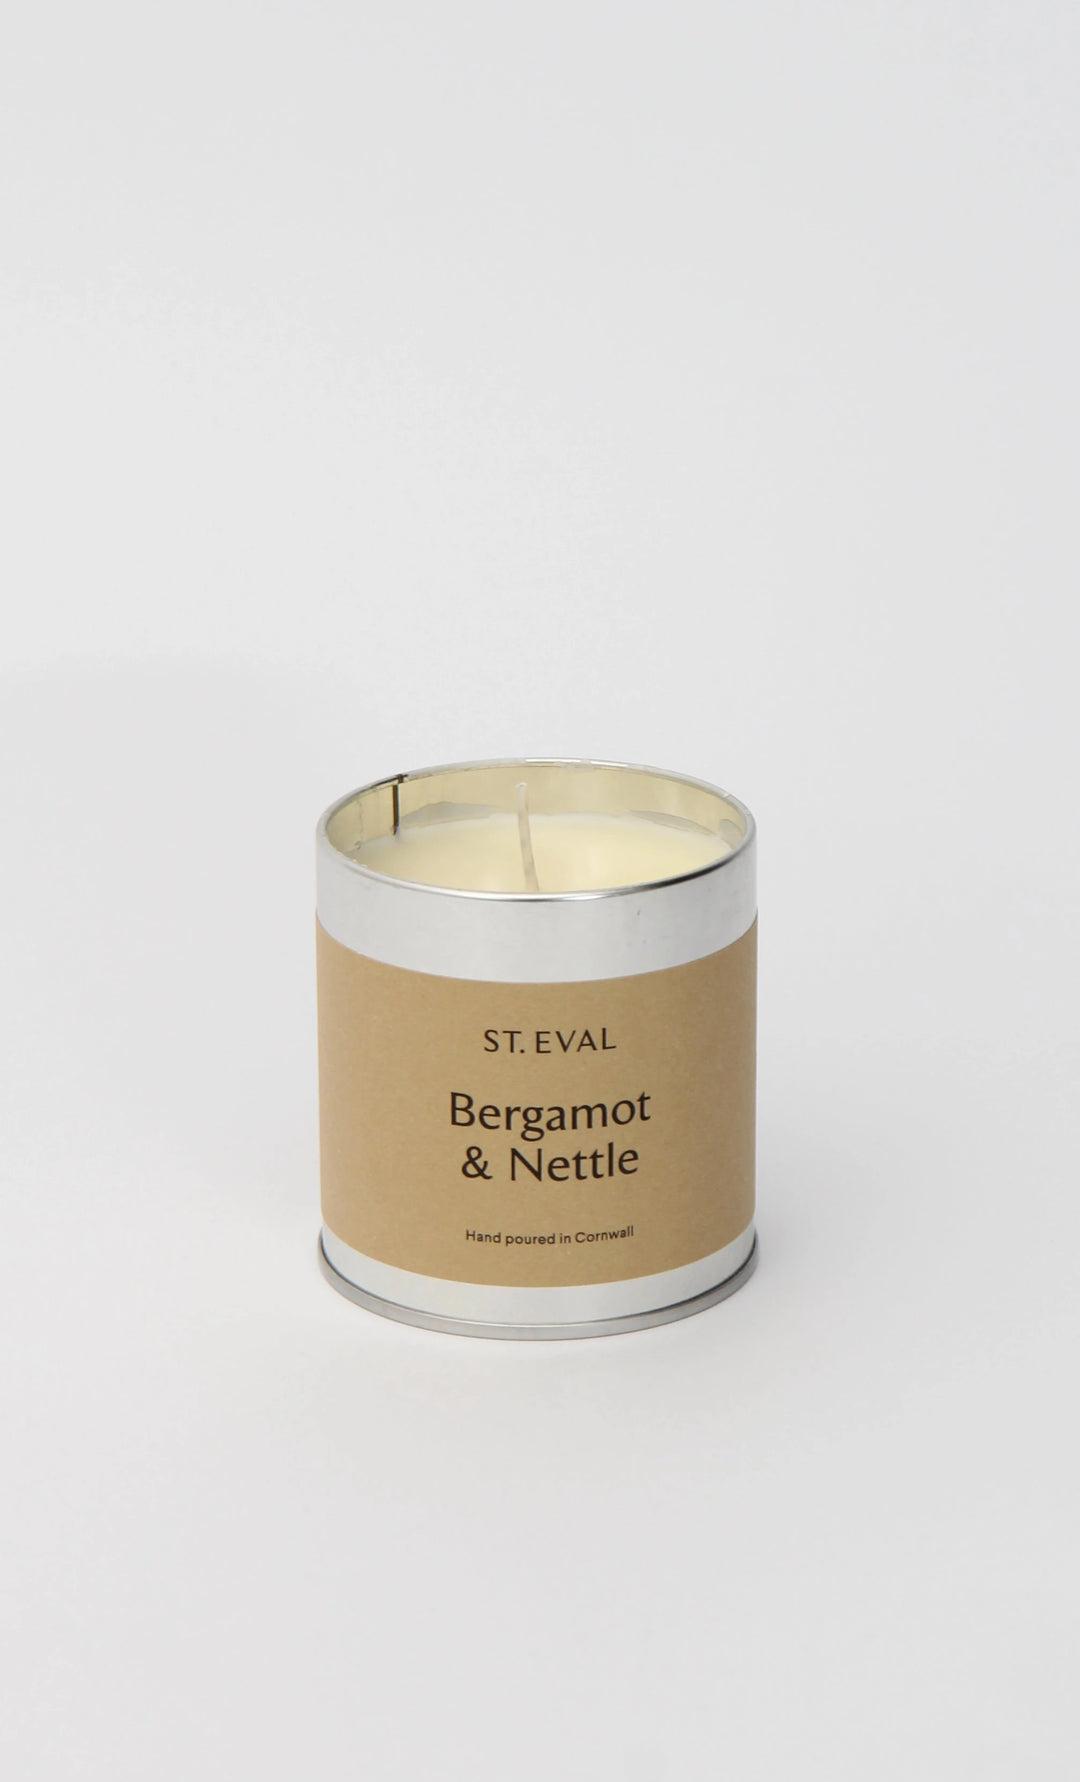 St Eval Candle Tin / Bergamot & Nettle